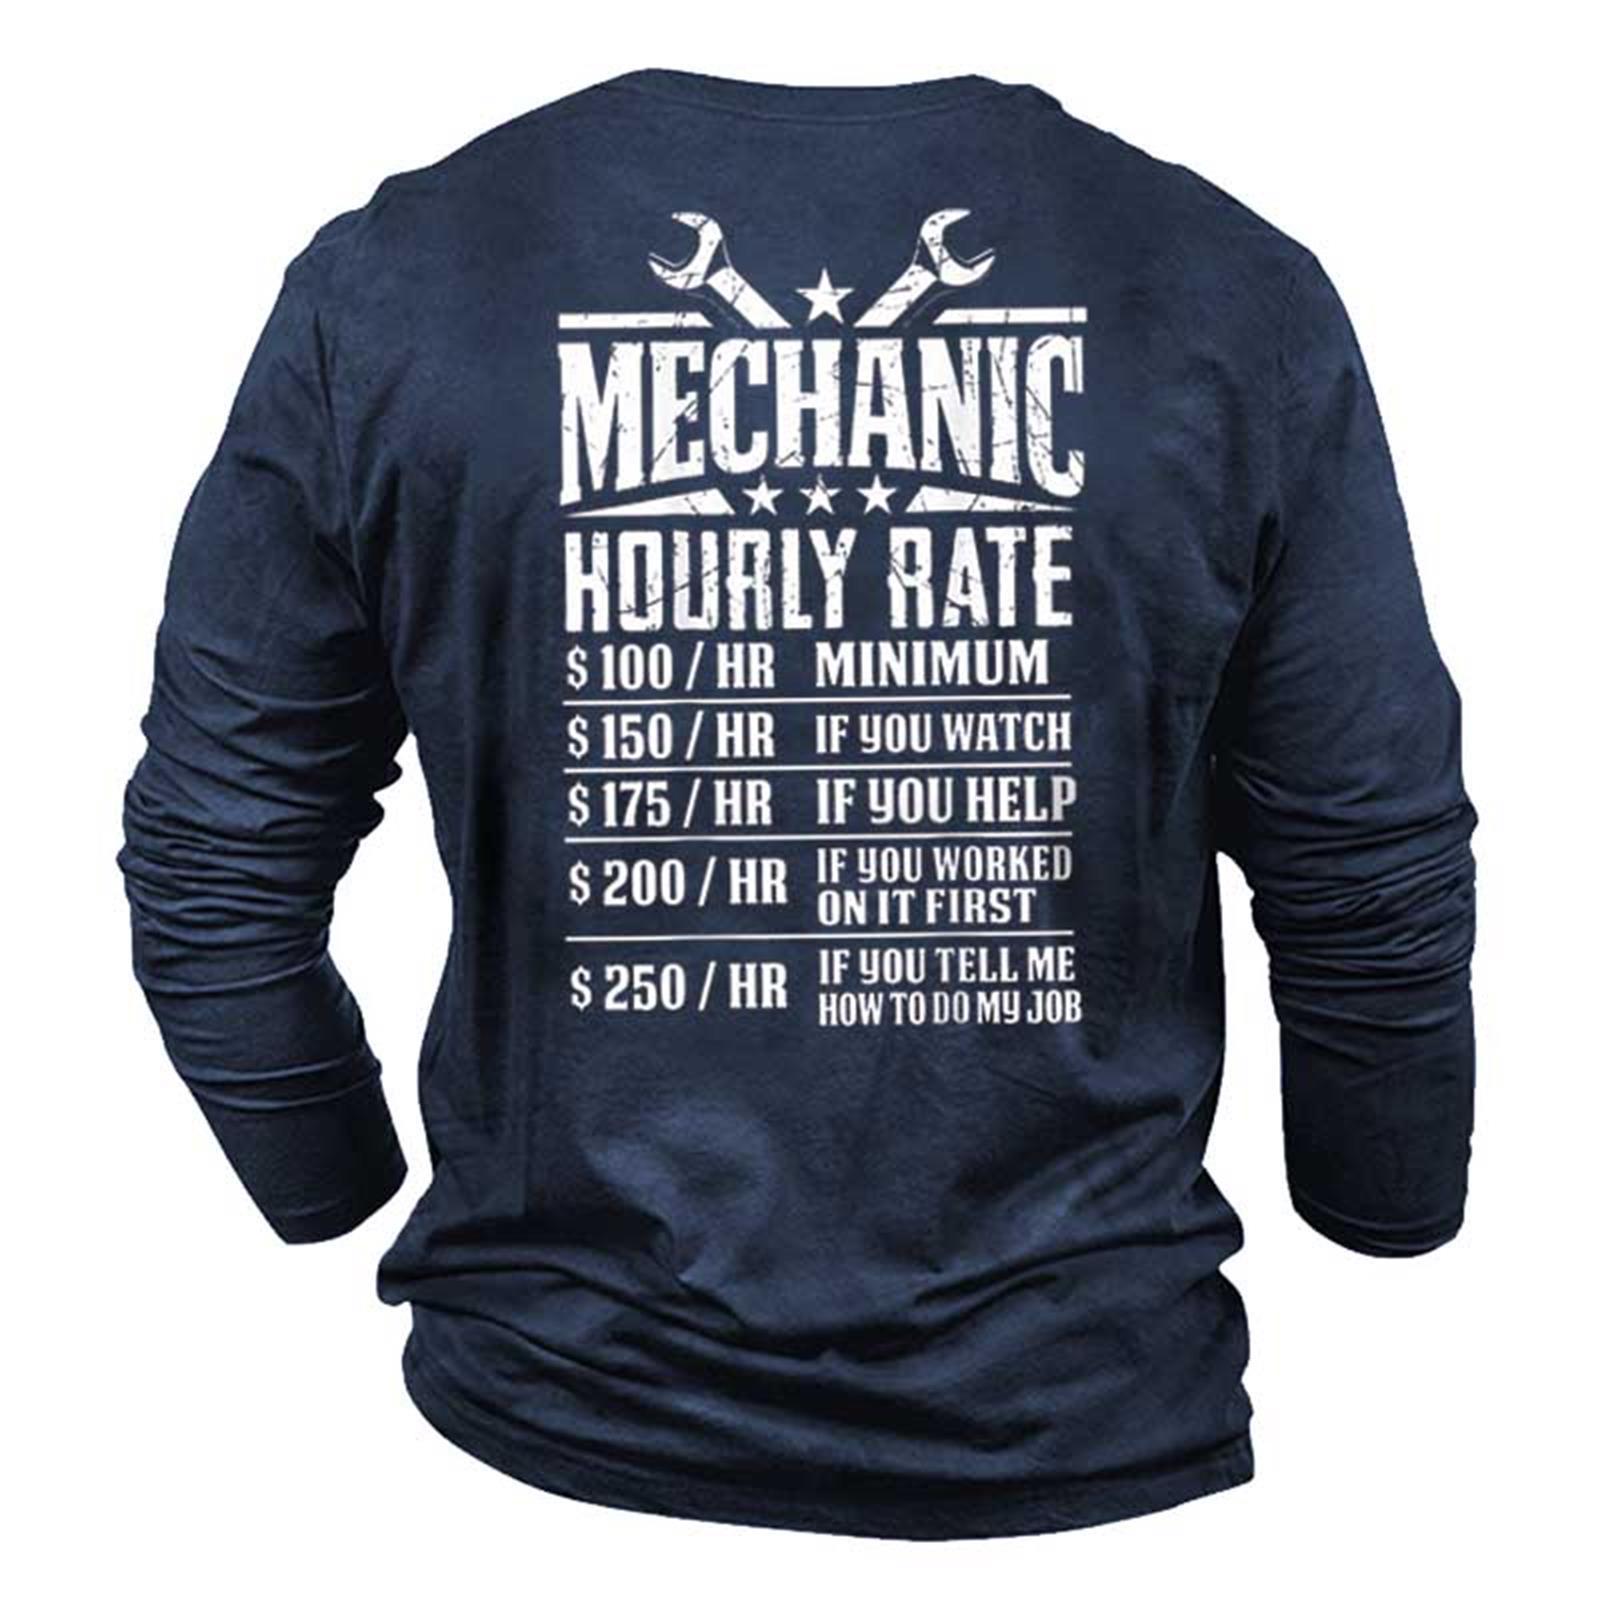 Men's Mechanic Hourly Rate Chic Cotton Long Sleeve T-shirt